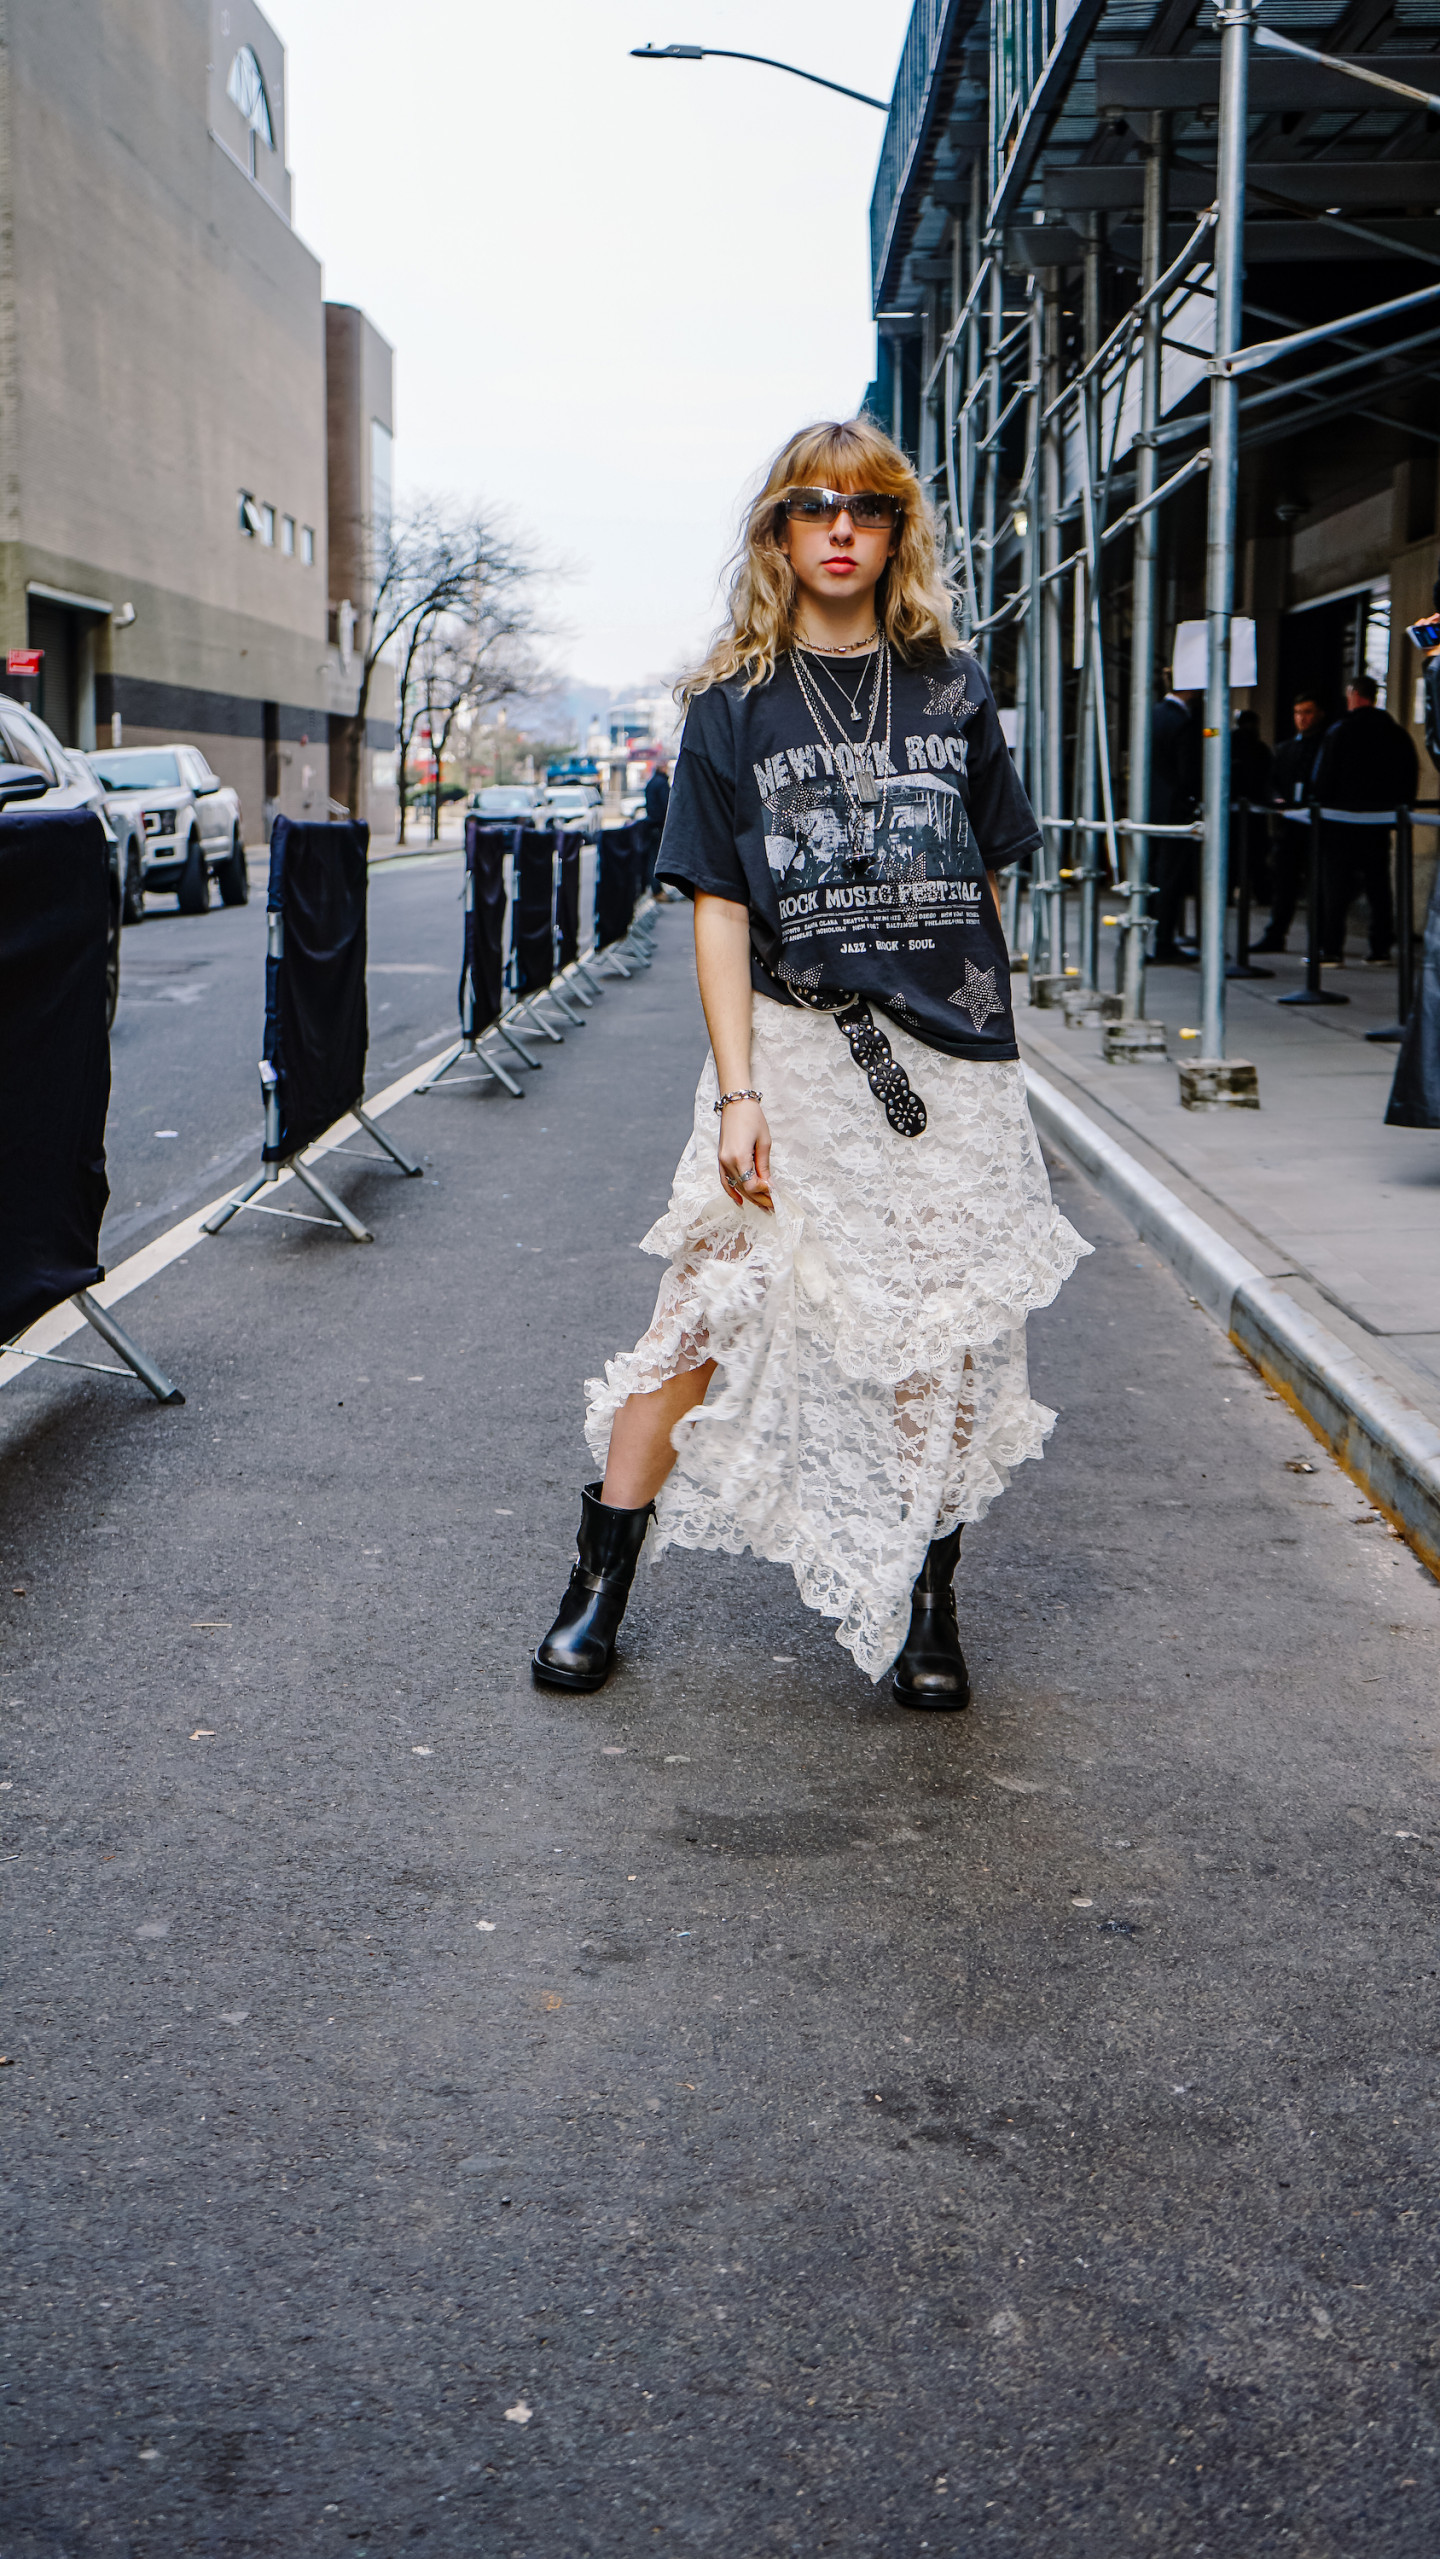 Laura Argentati strikes a pose outside New York Fashion Week festivities.